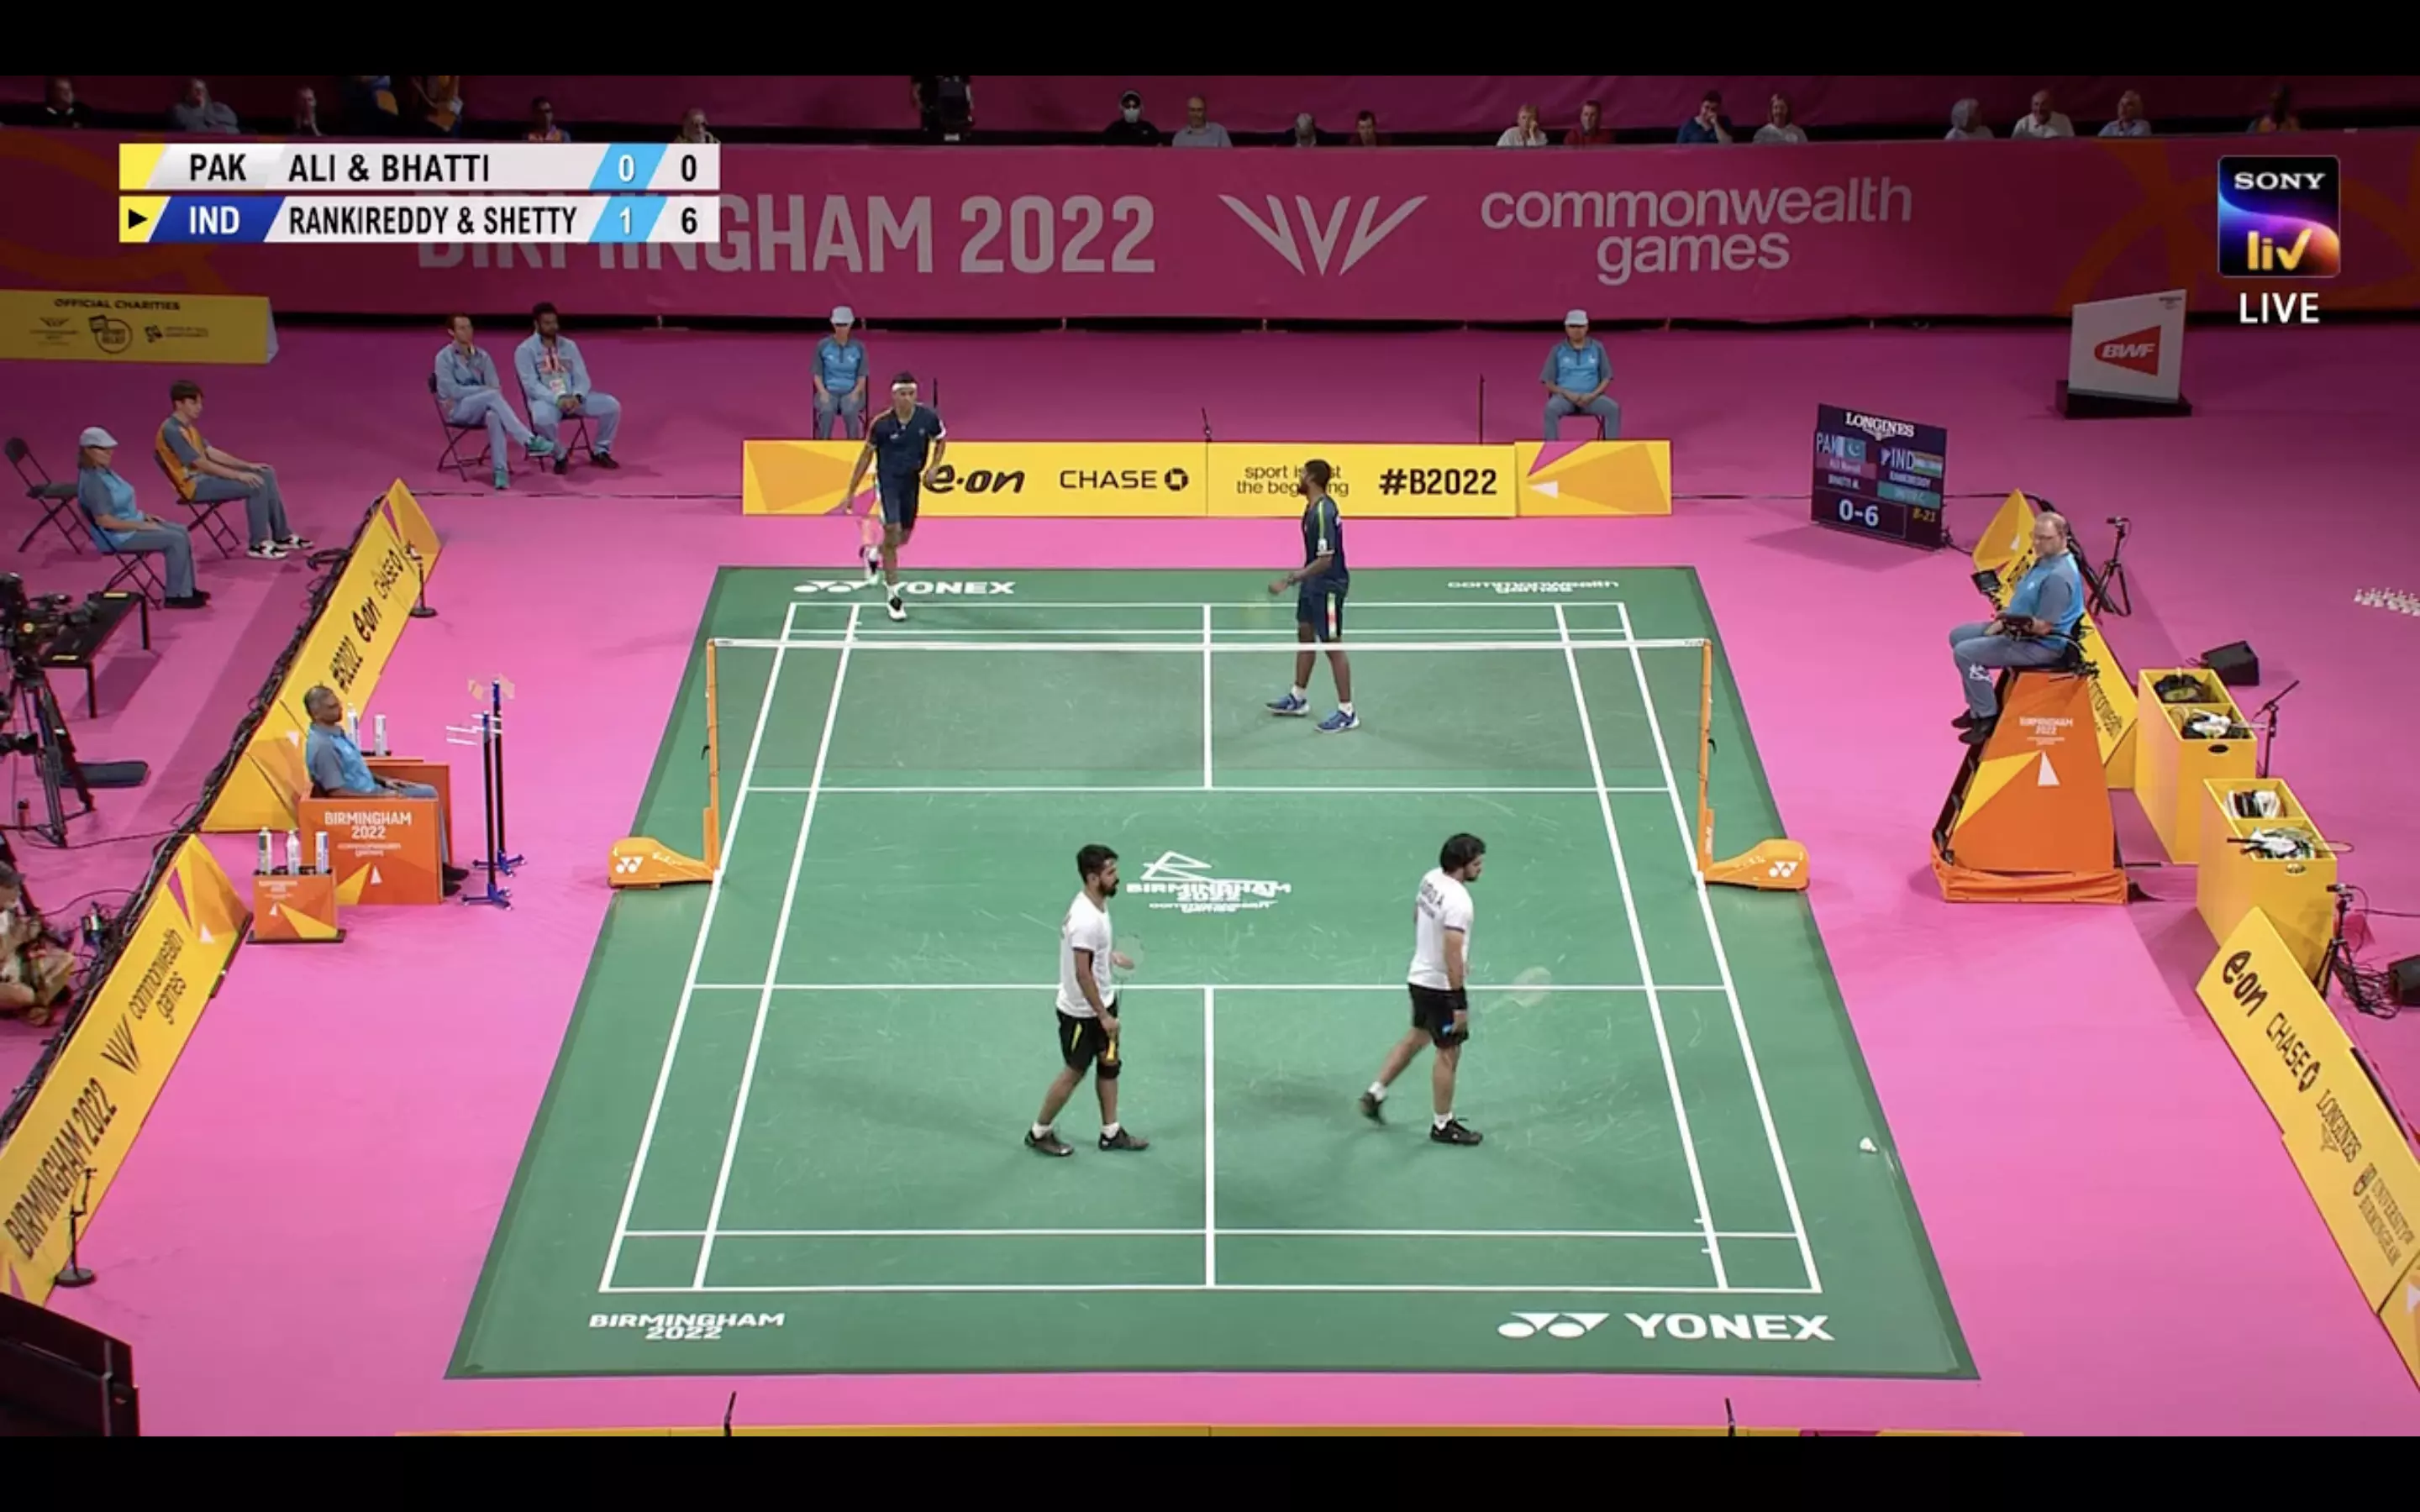 commonwealth games 2022 badminton live